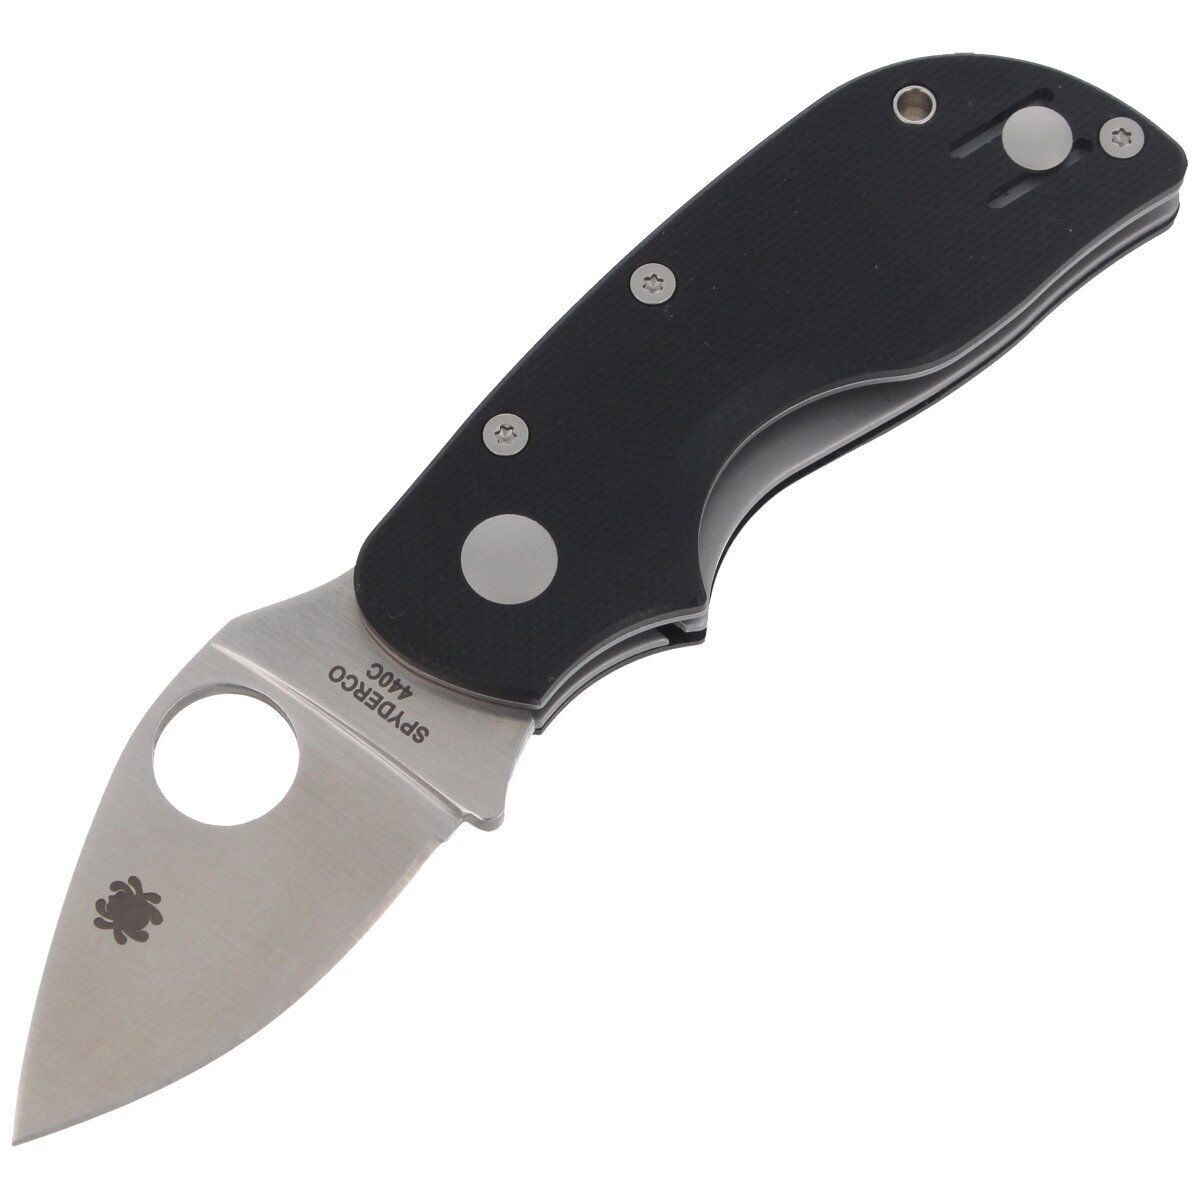 Spyderco Chicago G-10 Black PlainEdge Knife (C130GP)